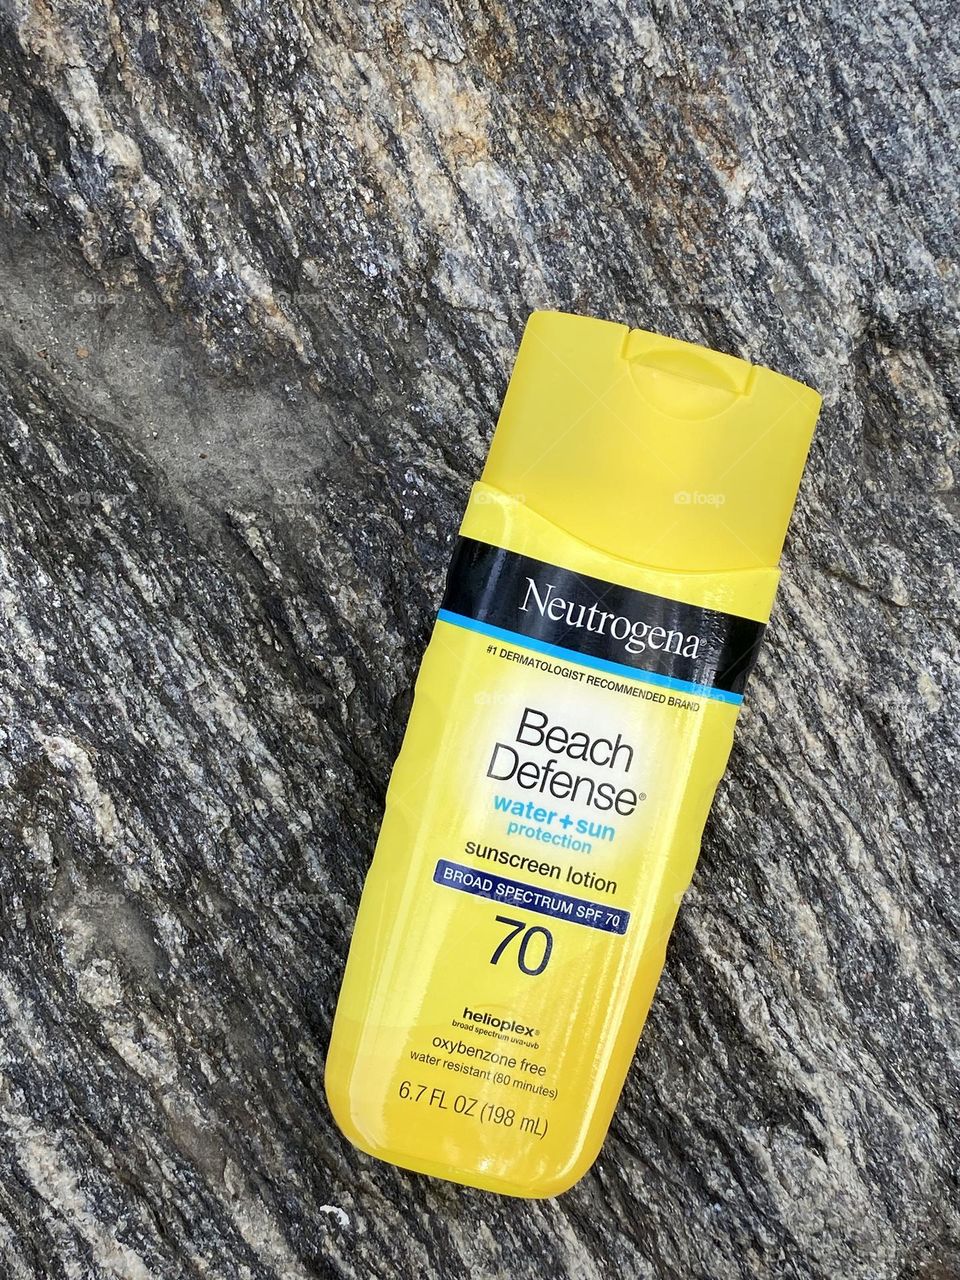 Neutrogena Beach defense sunscreen lotion lay flat on a big rock.